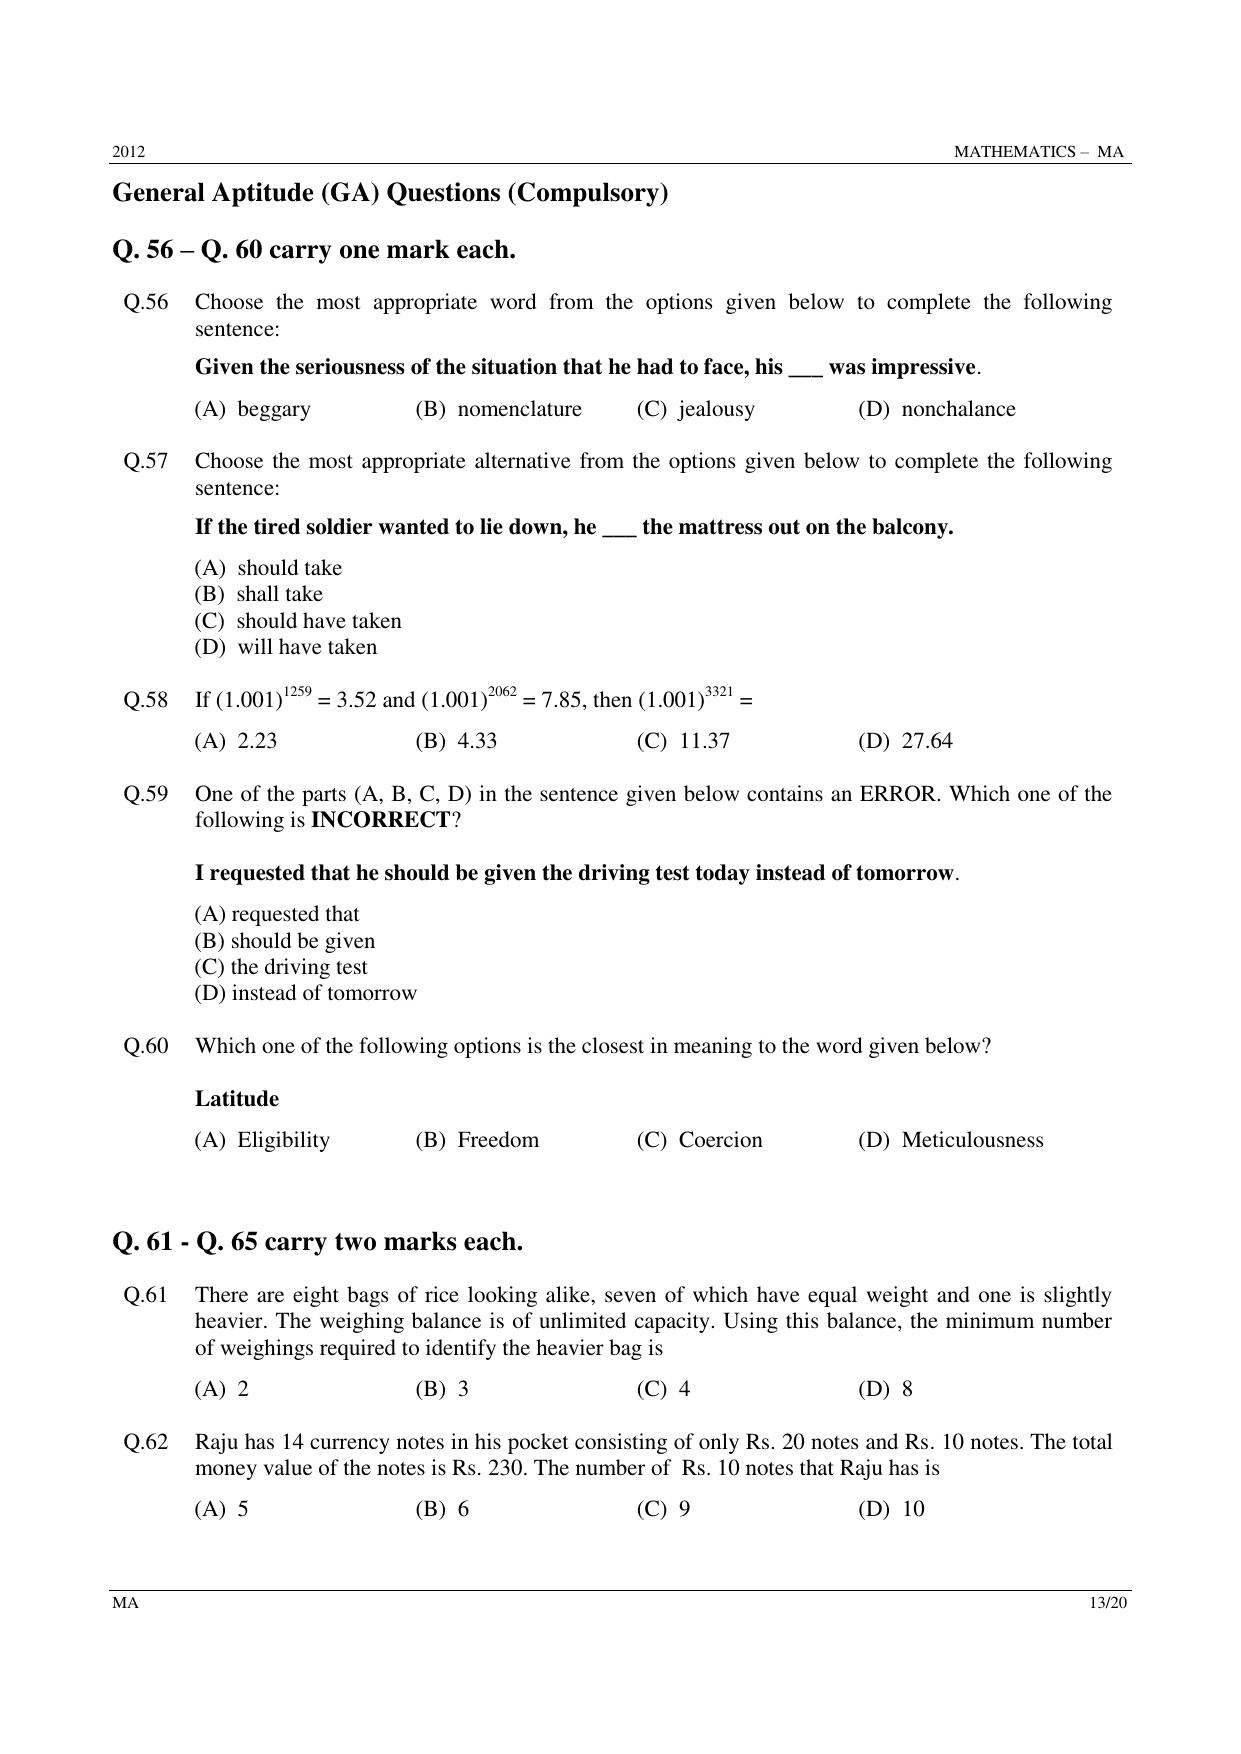 GATE 2012 Mathematics (MA) Question Paper with Answer Key - Page 13